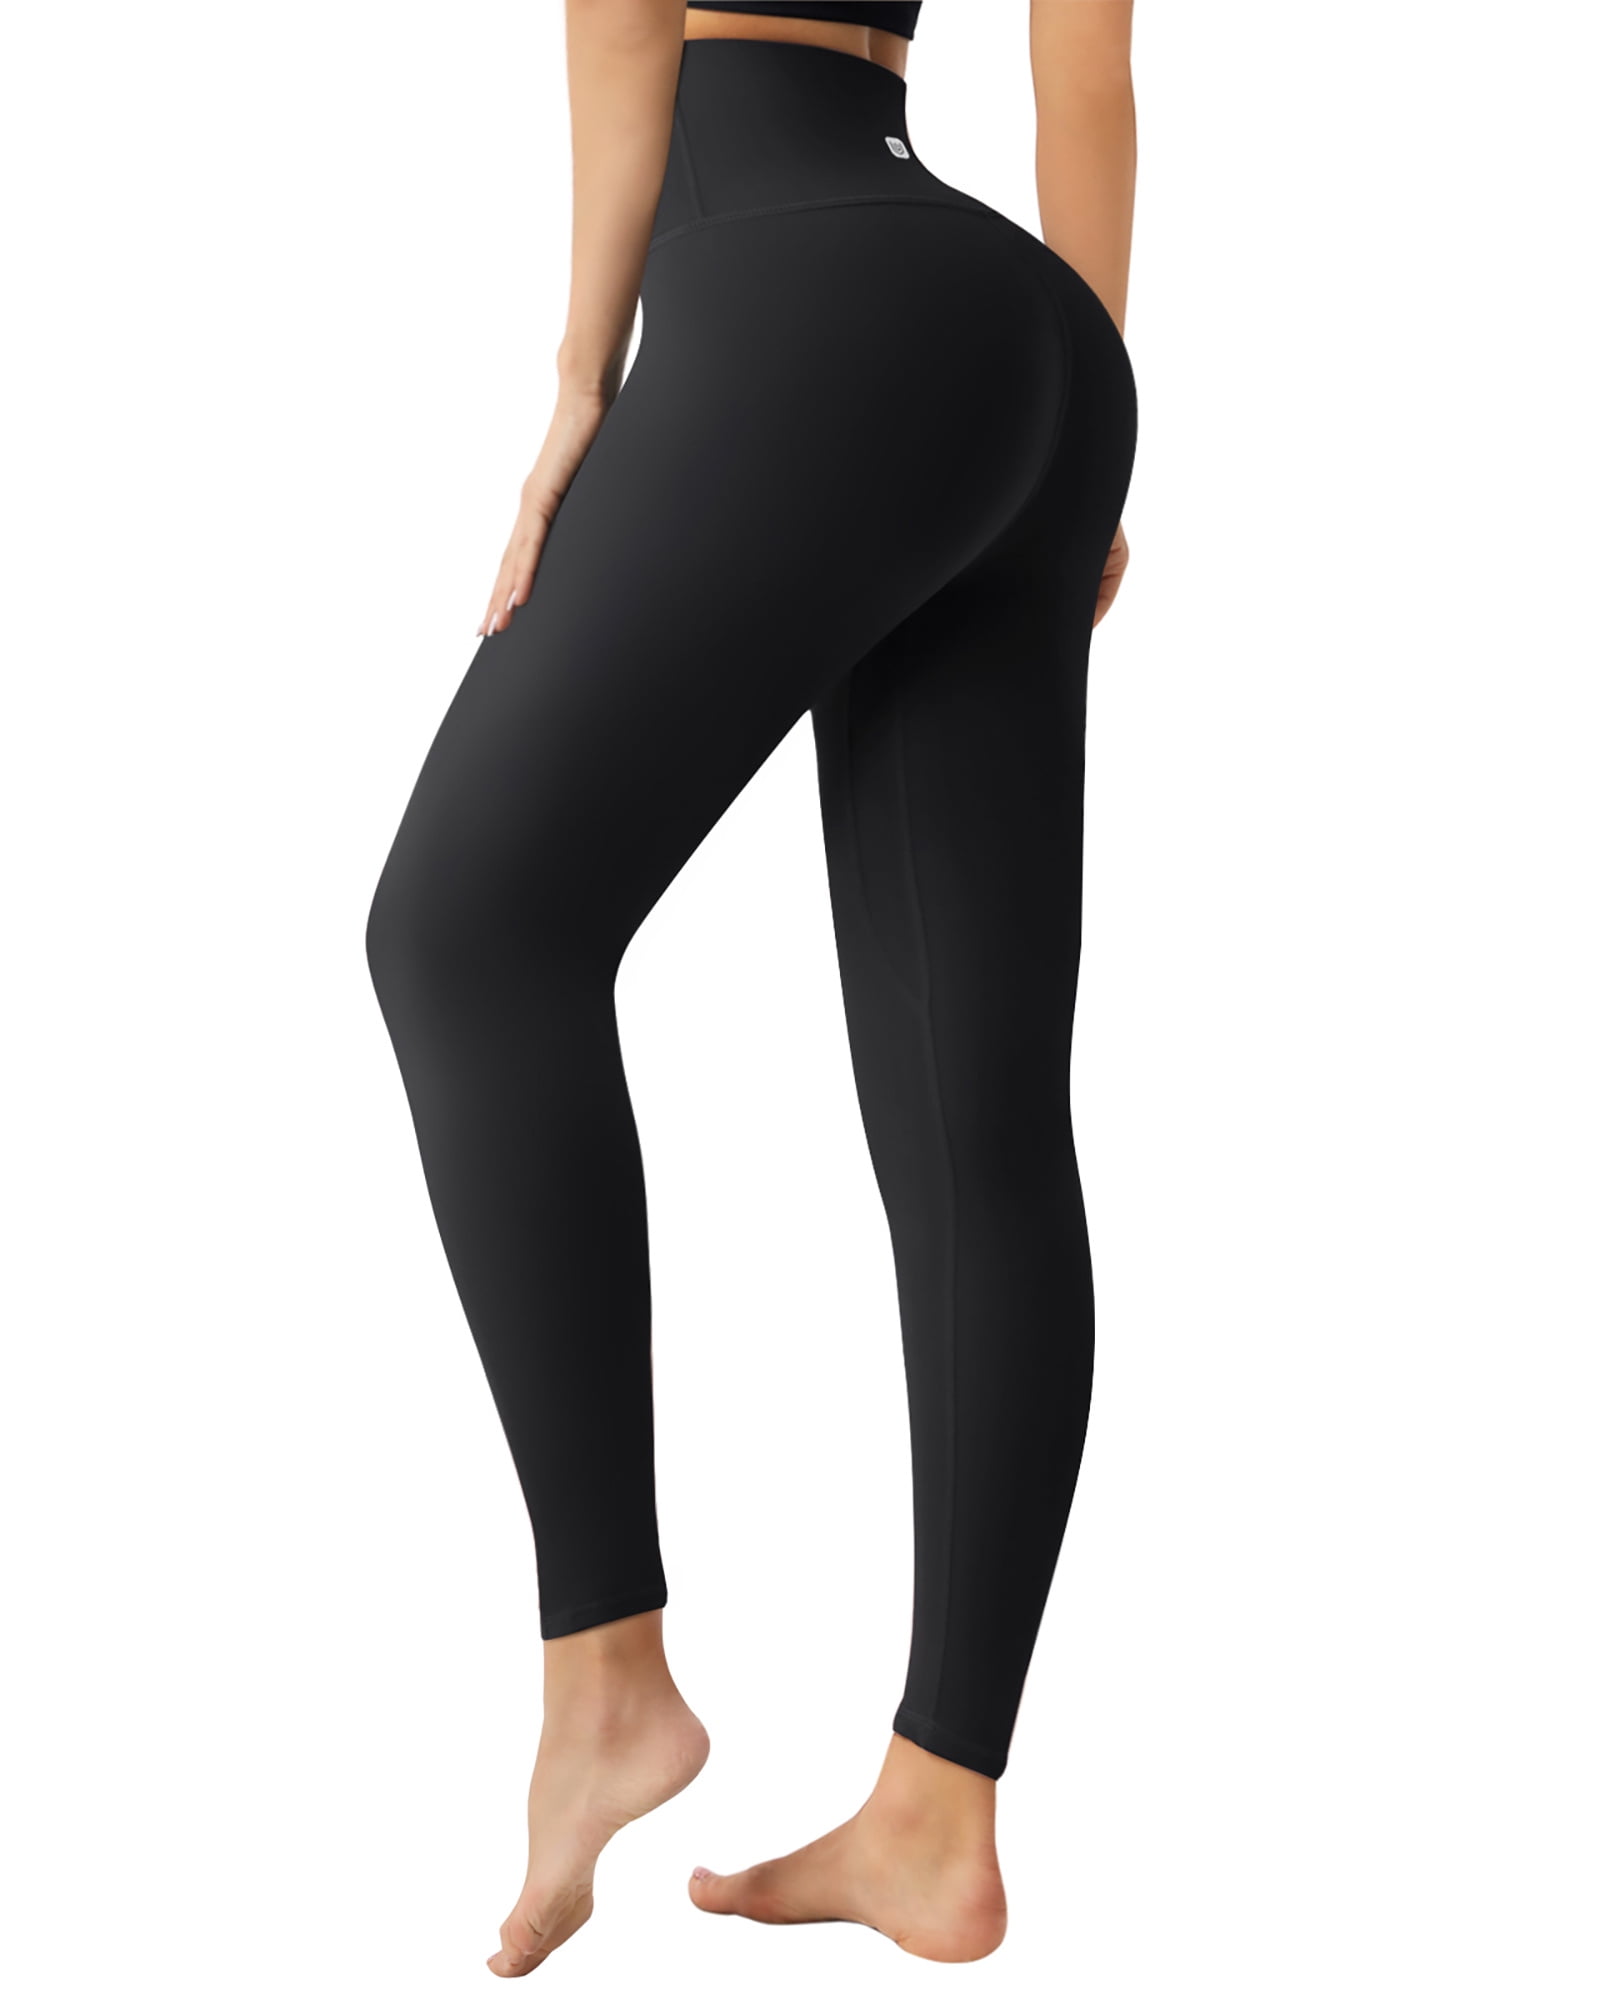 Black Leggings With Pockets for Women, Yoga Pants, 5 High Waist Leggings, Buttery  Soft, One Size, Plus Size, 2XL Leggings, Workout Leggings -  Sweden